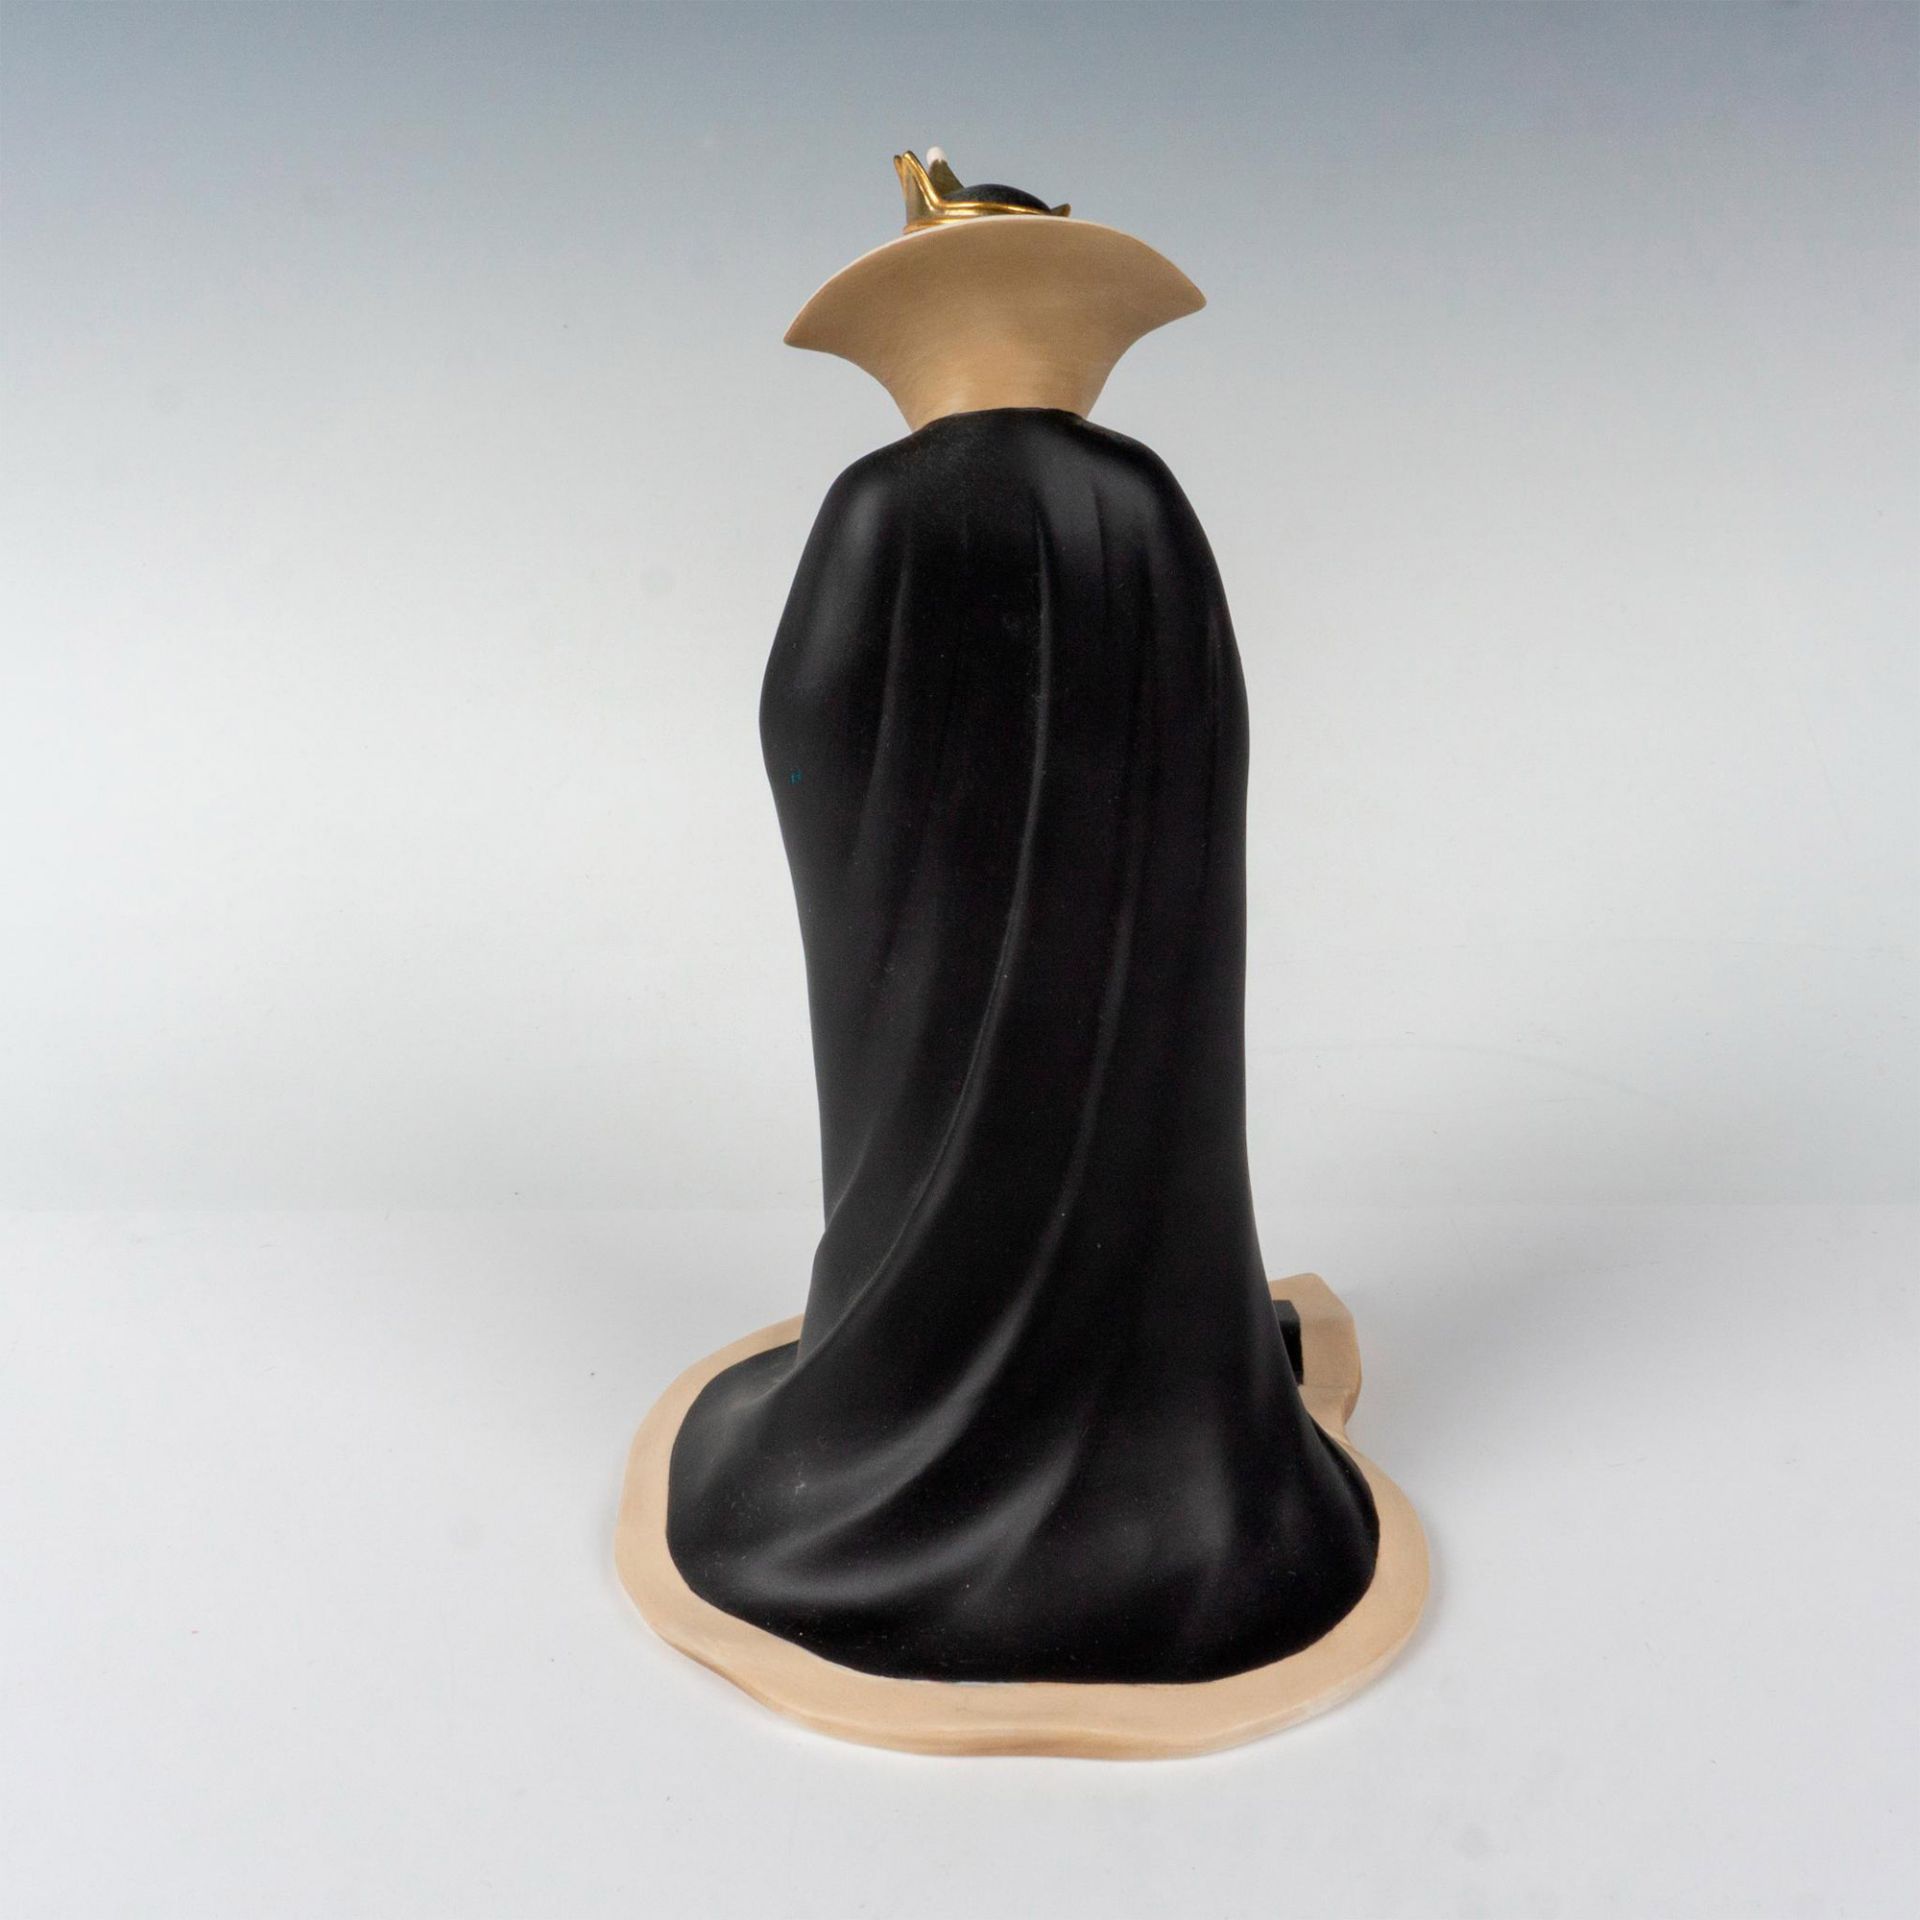 Walt Disney Classics Collection Figurine, Queen - Image 2 of 4